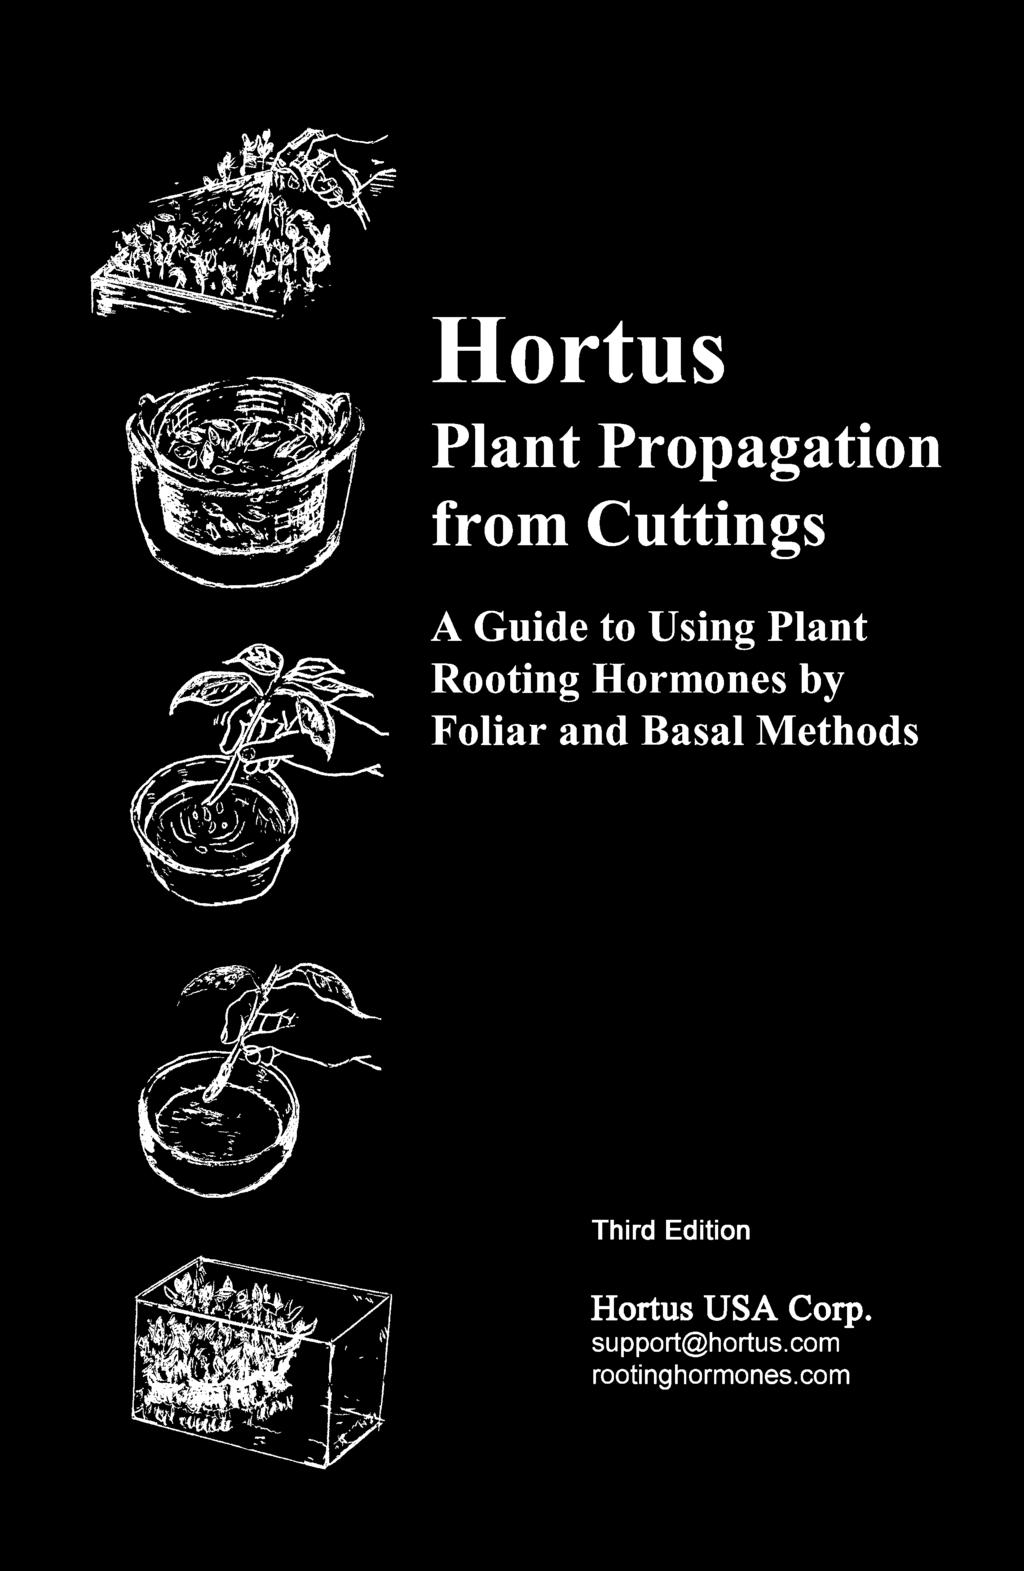 Third Edition Hortus USA Corp.